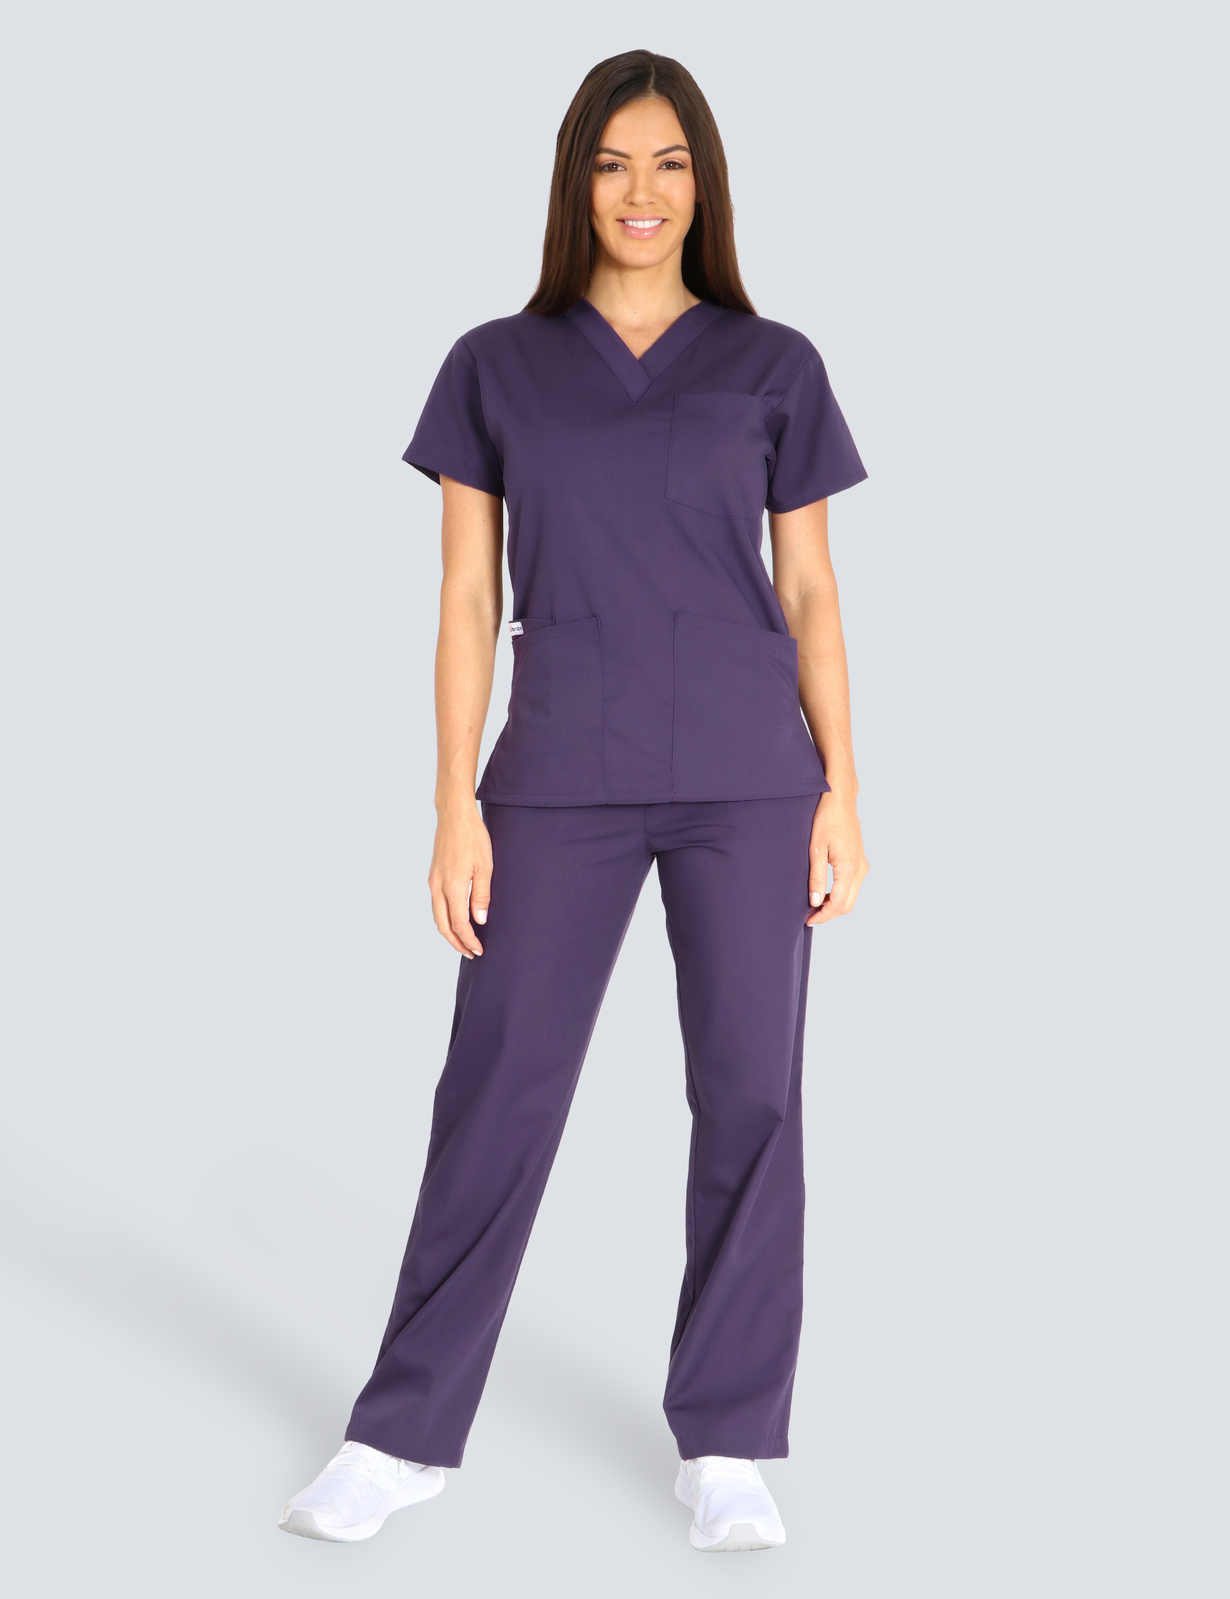 Toowoomba Hospital Pharmacist Uniform Set Bundle (4 Pocket Top and Cargo Pants in Aubergine incl Logo)